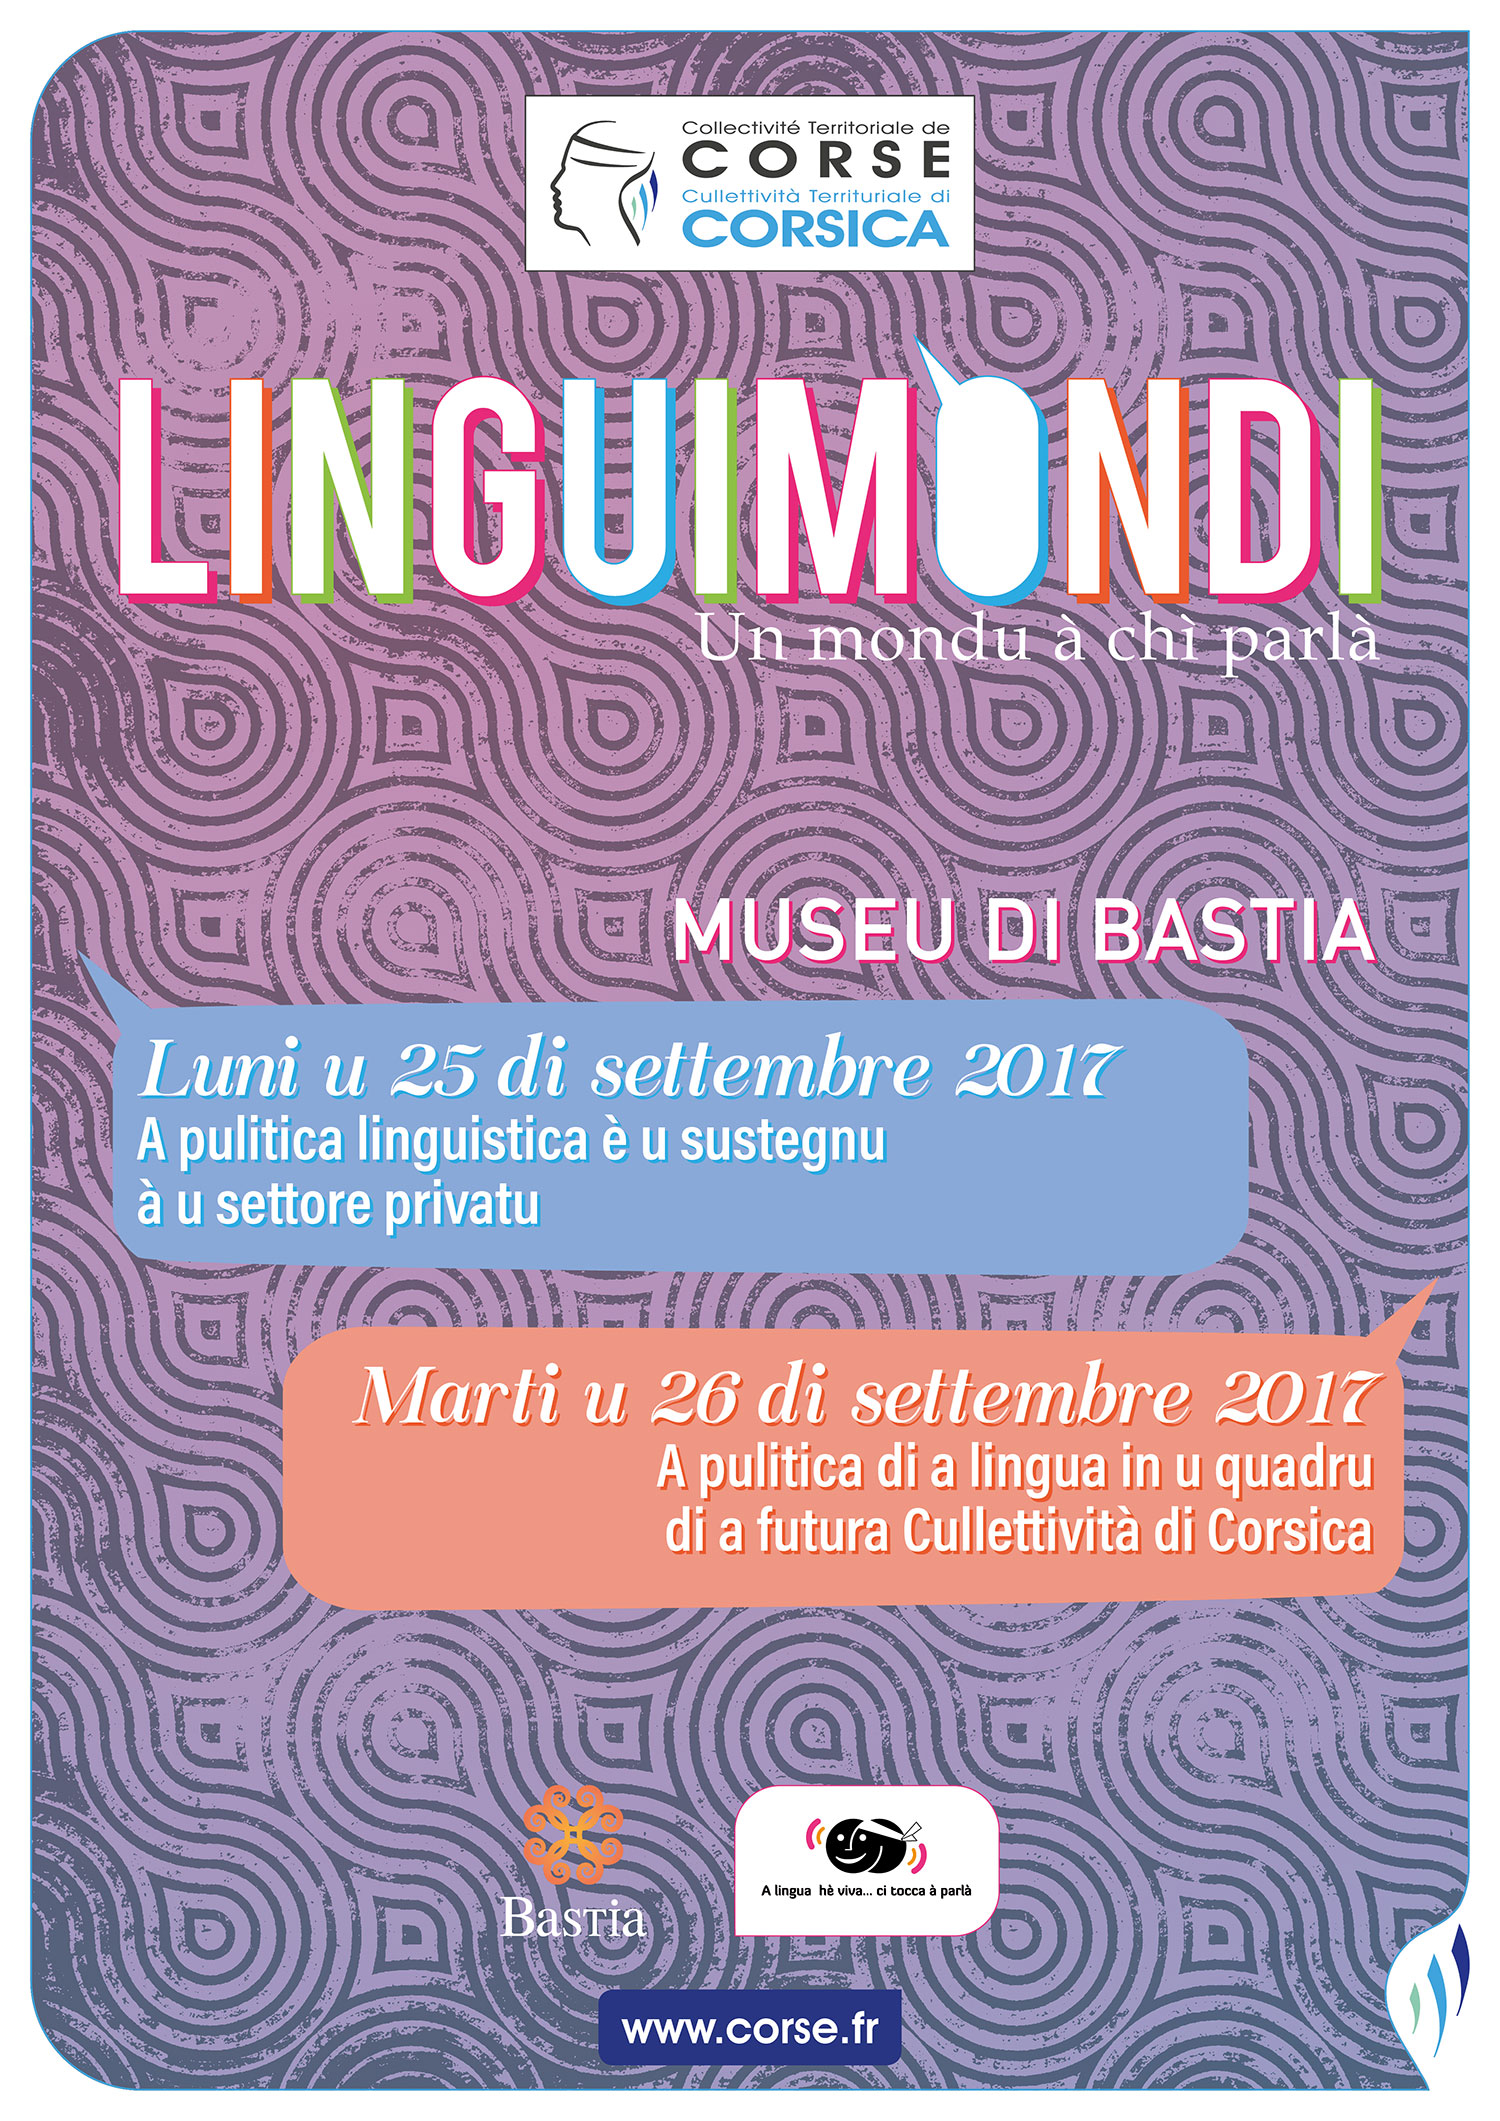 Linguimondi 2017 in Bastia